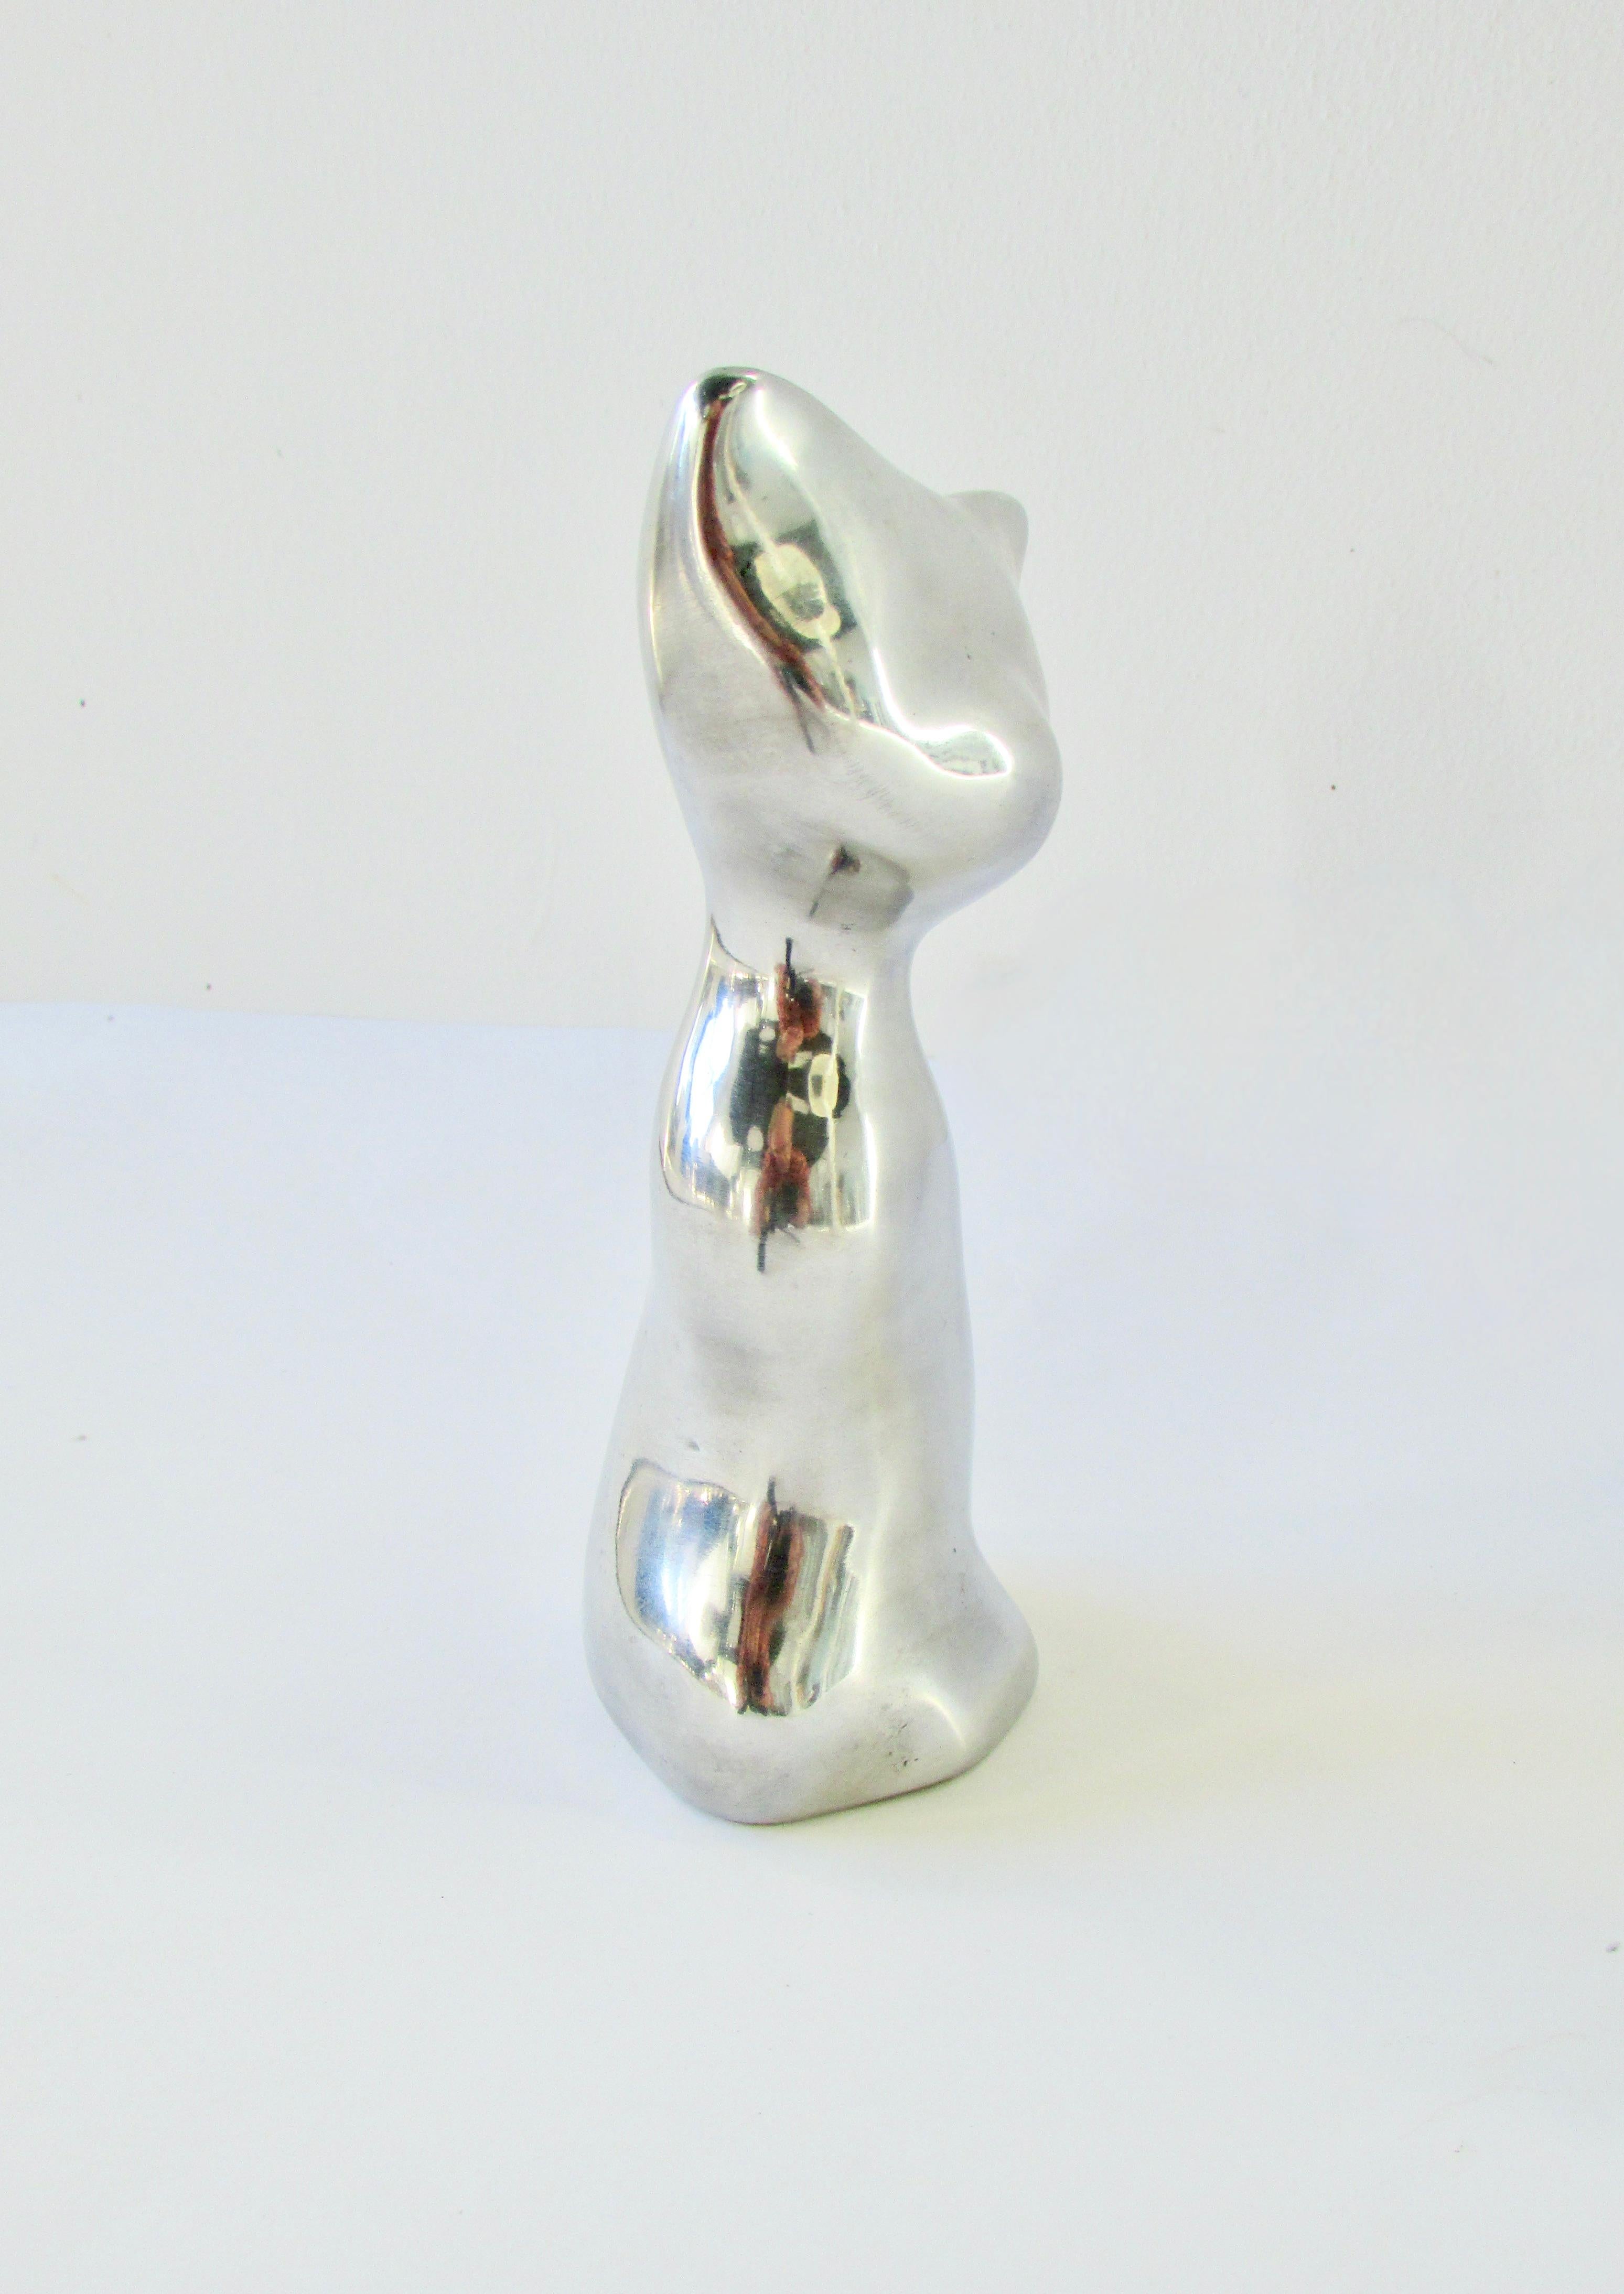 Canadian Hoselton Canada stylized polished cast aluminum desk top cat sculpture For Sale